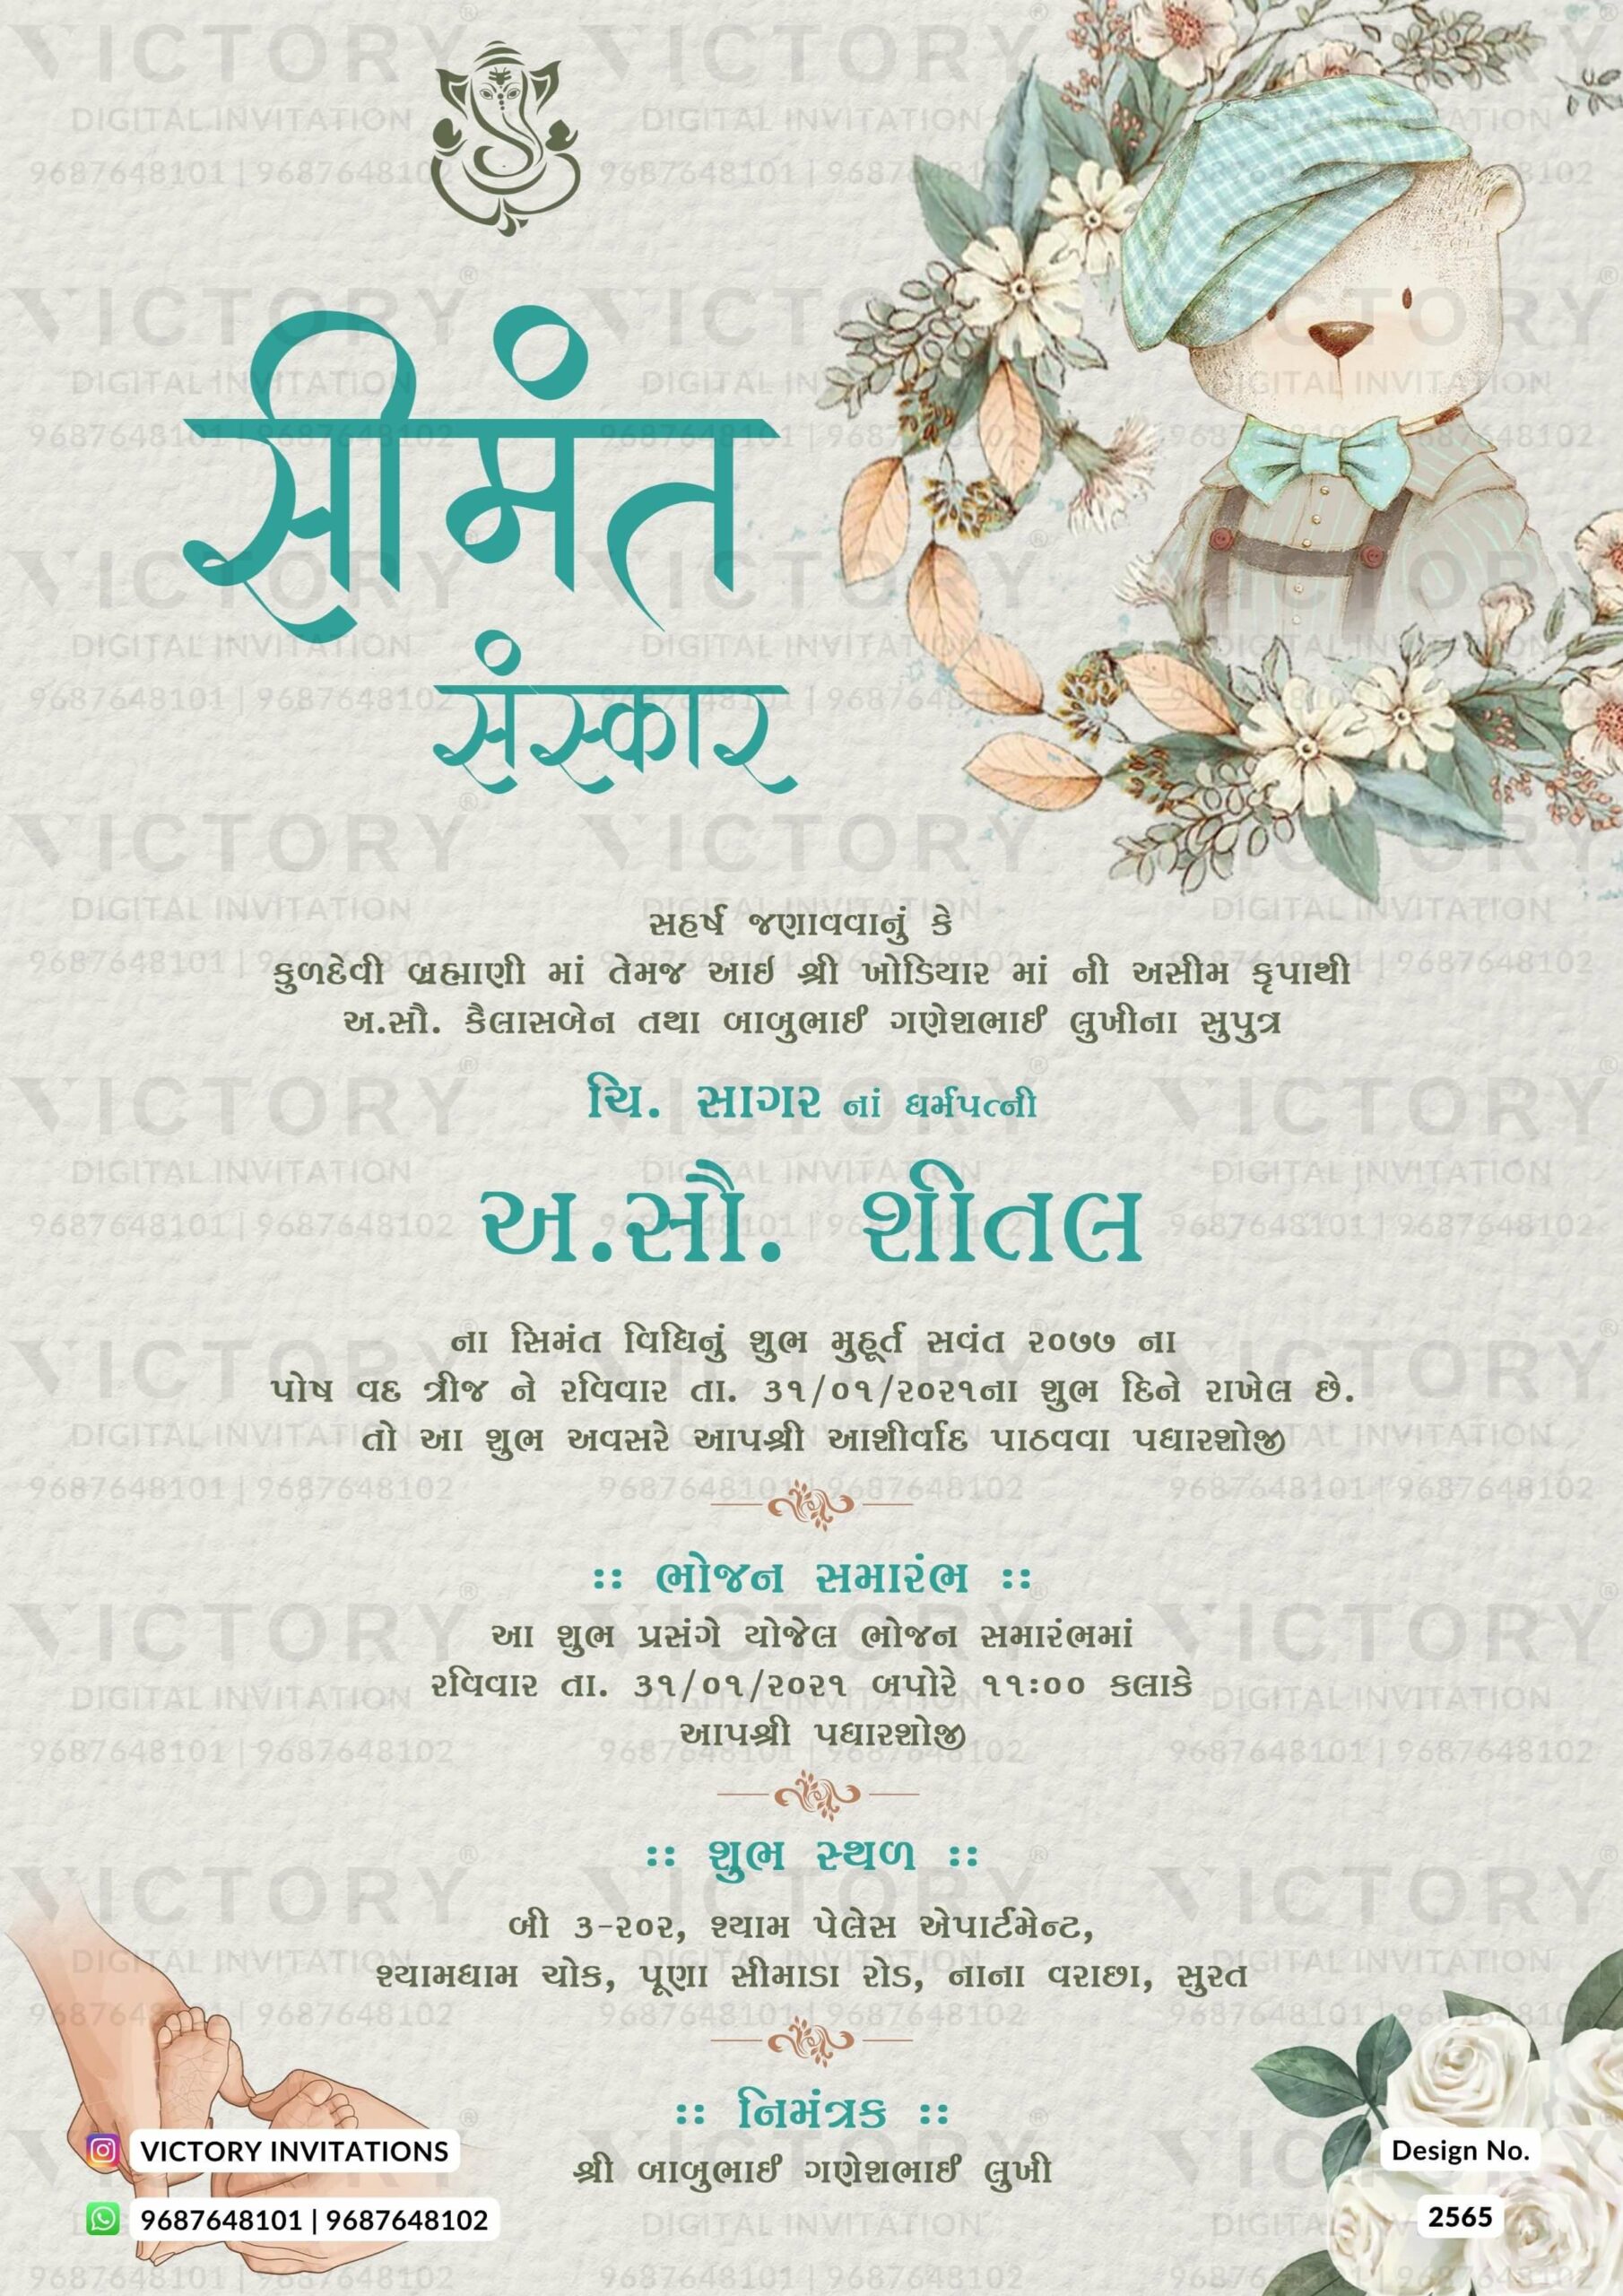 Floral theme Simant Vidhi baby shower digital invitation card in Gujarati language, design 2565